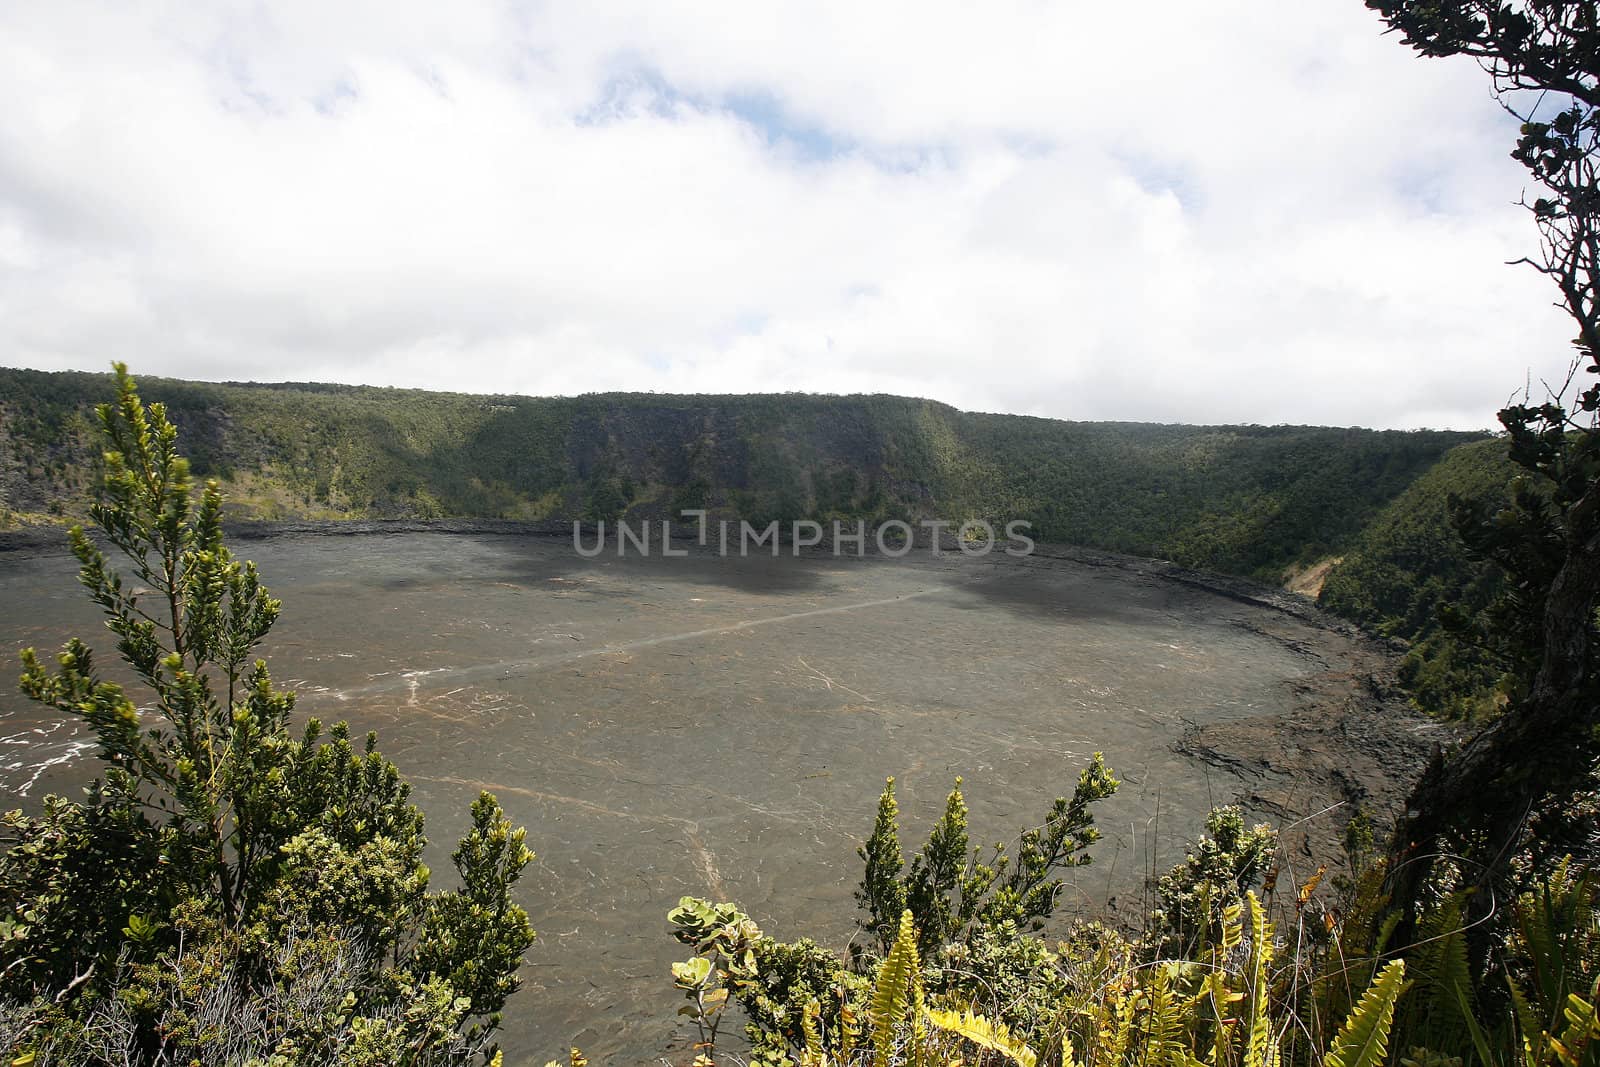 Crater by mattvanderlinde